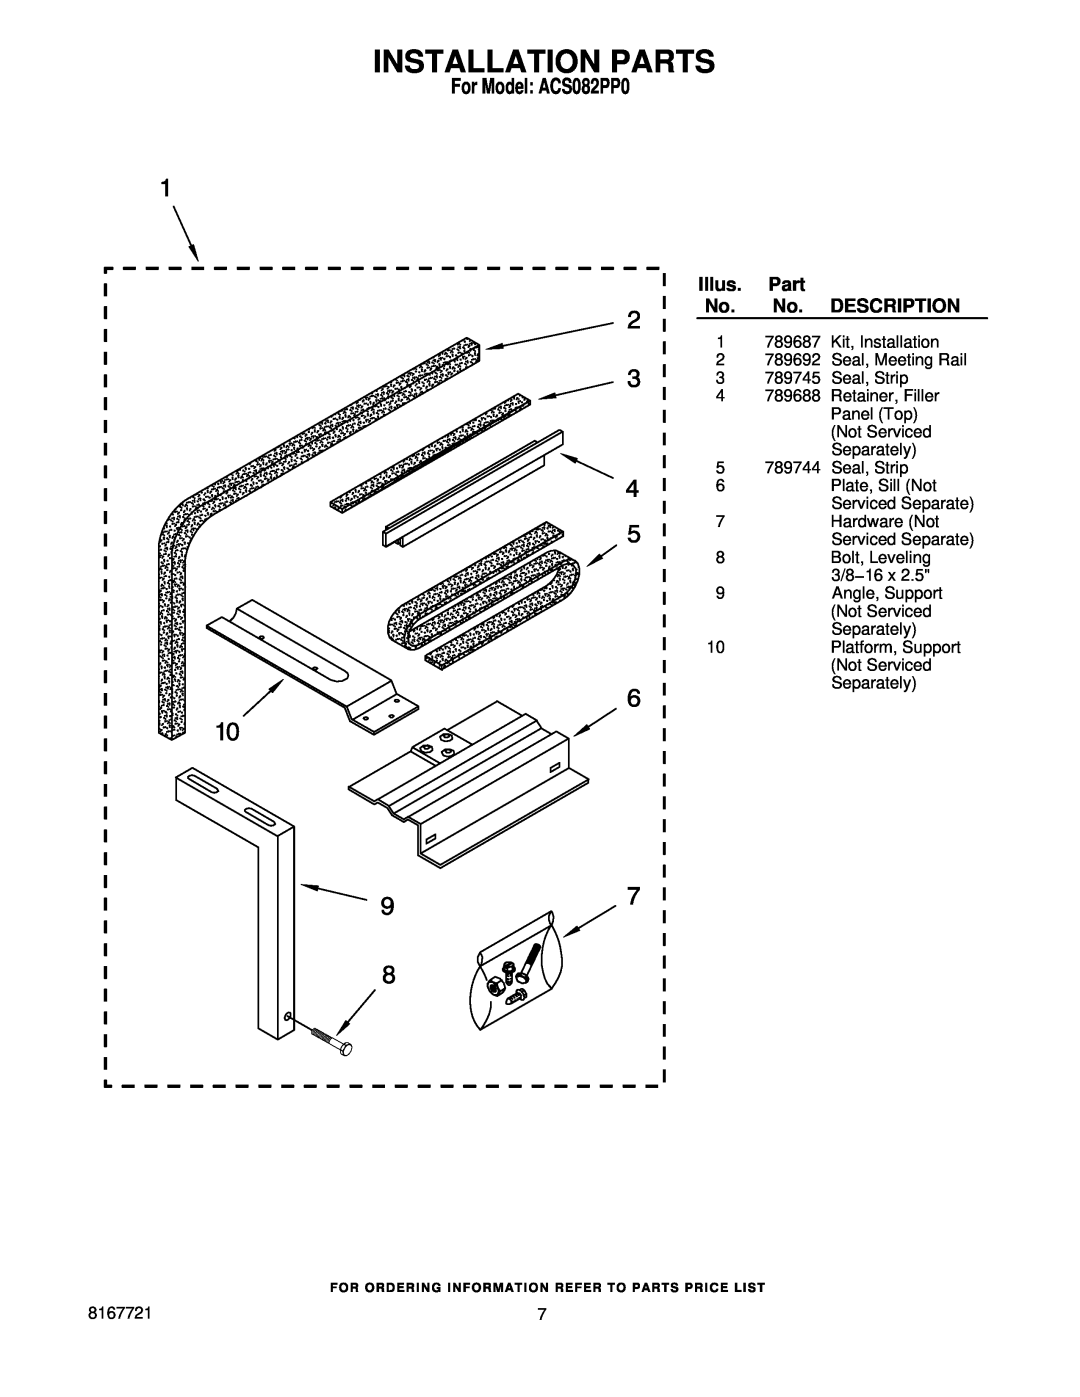 Whirlpool manual Installation Parts, Illus, Description, For Model ACS082PP0 